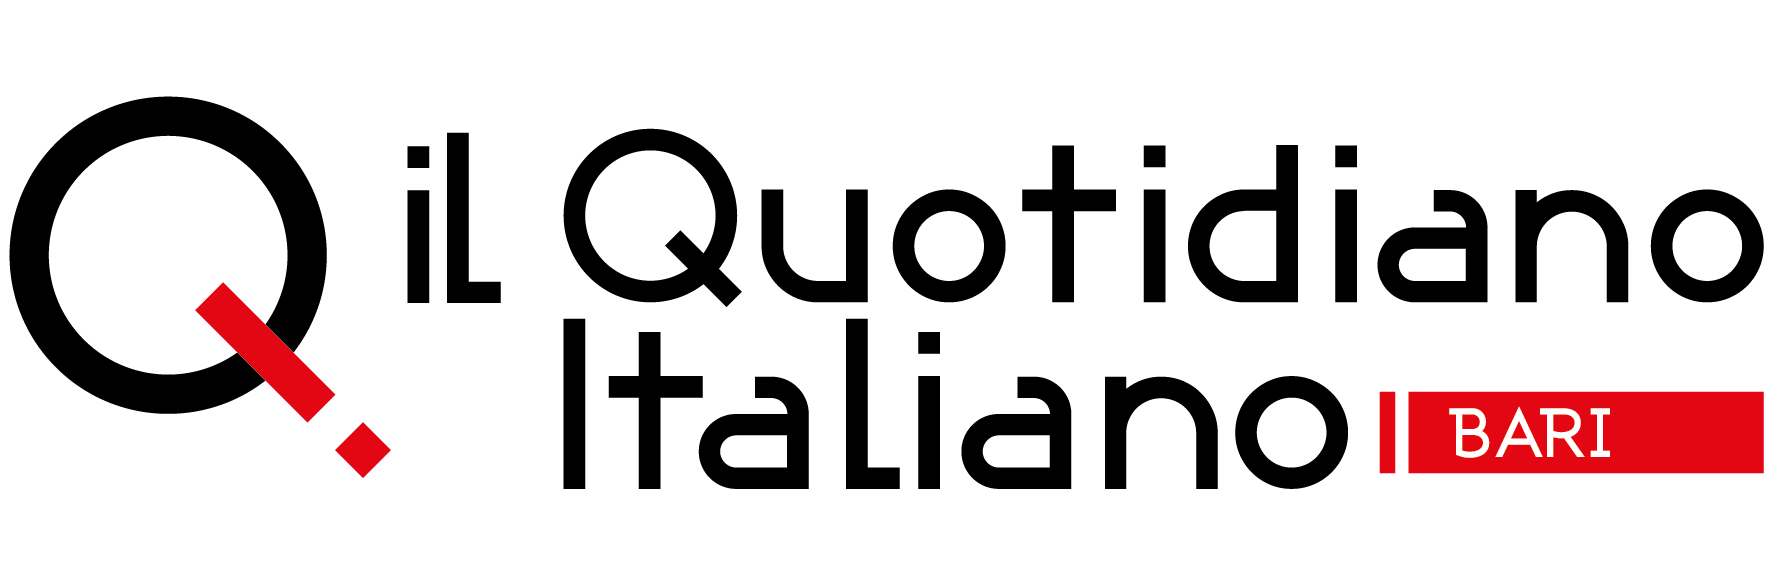 QI logo Tavola disegno 1